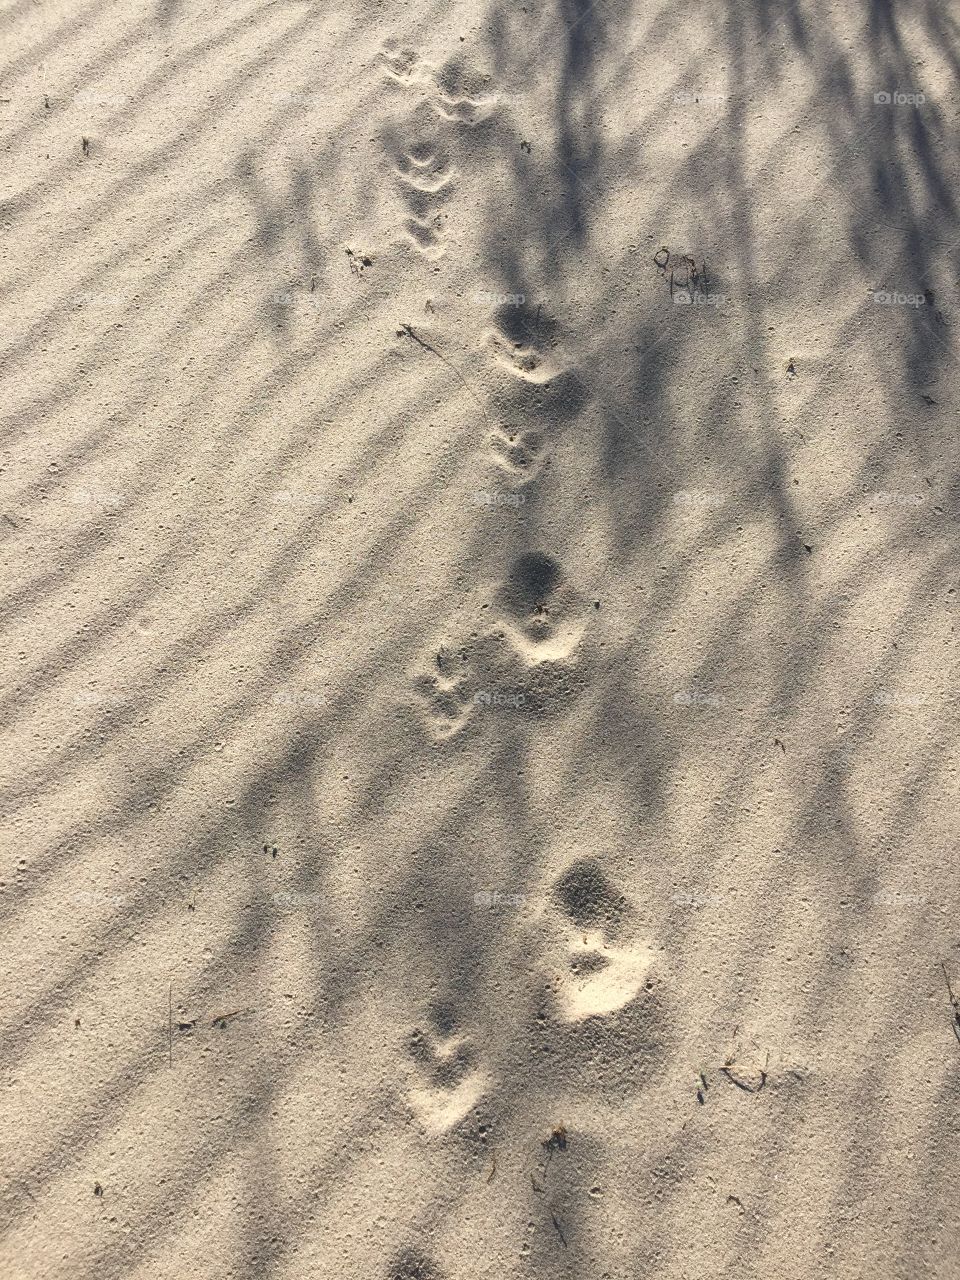 Desert Creature tracks